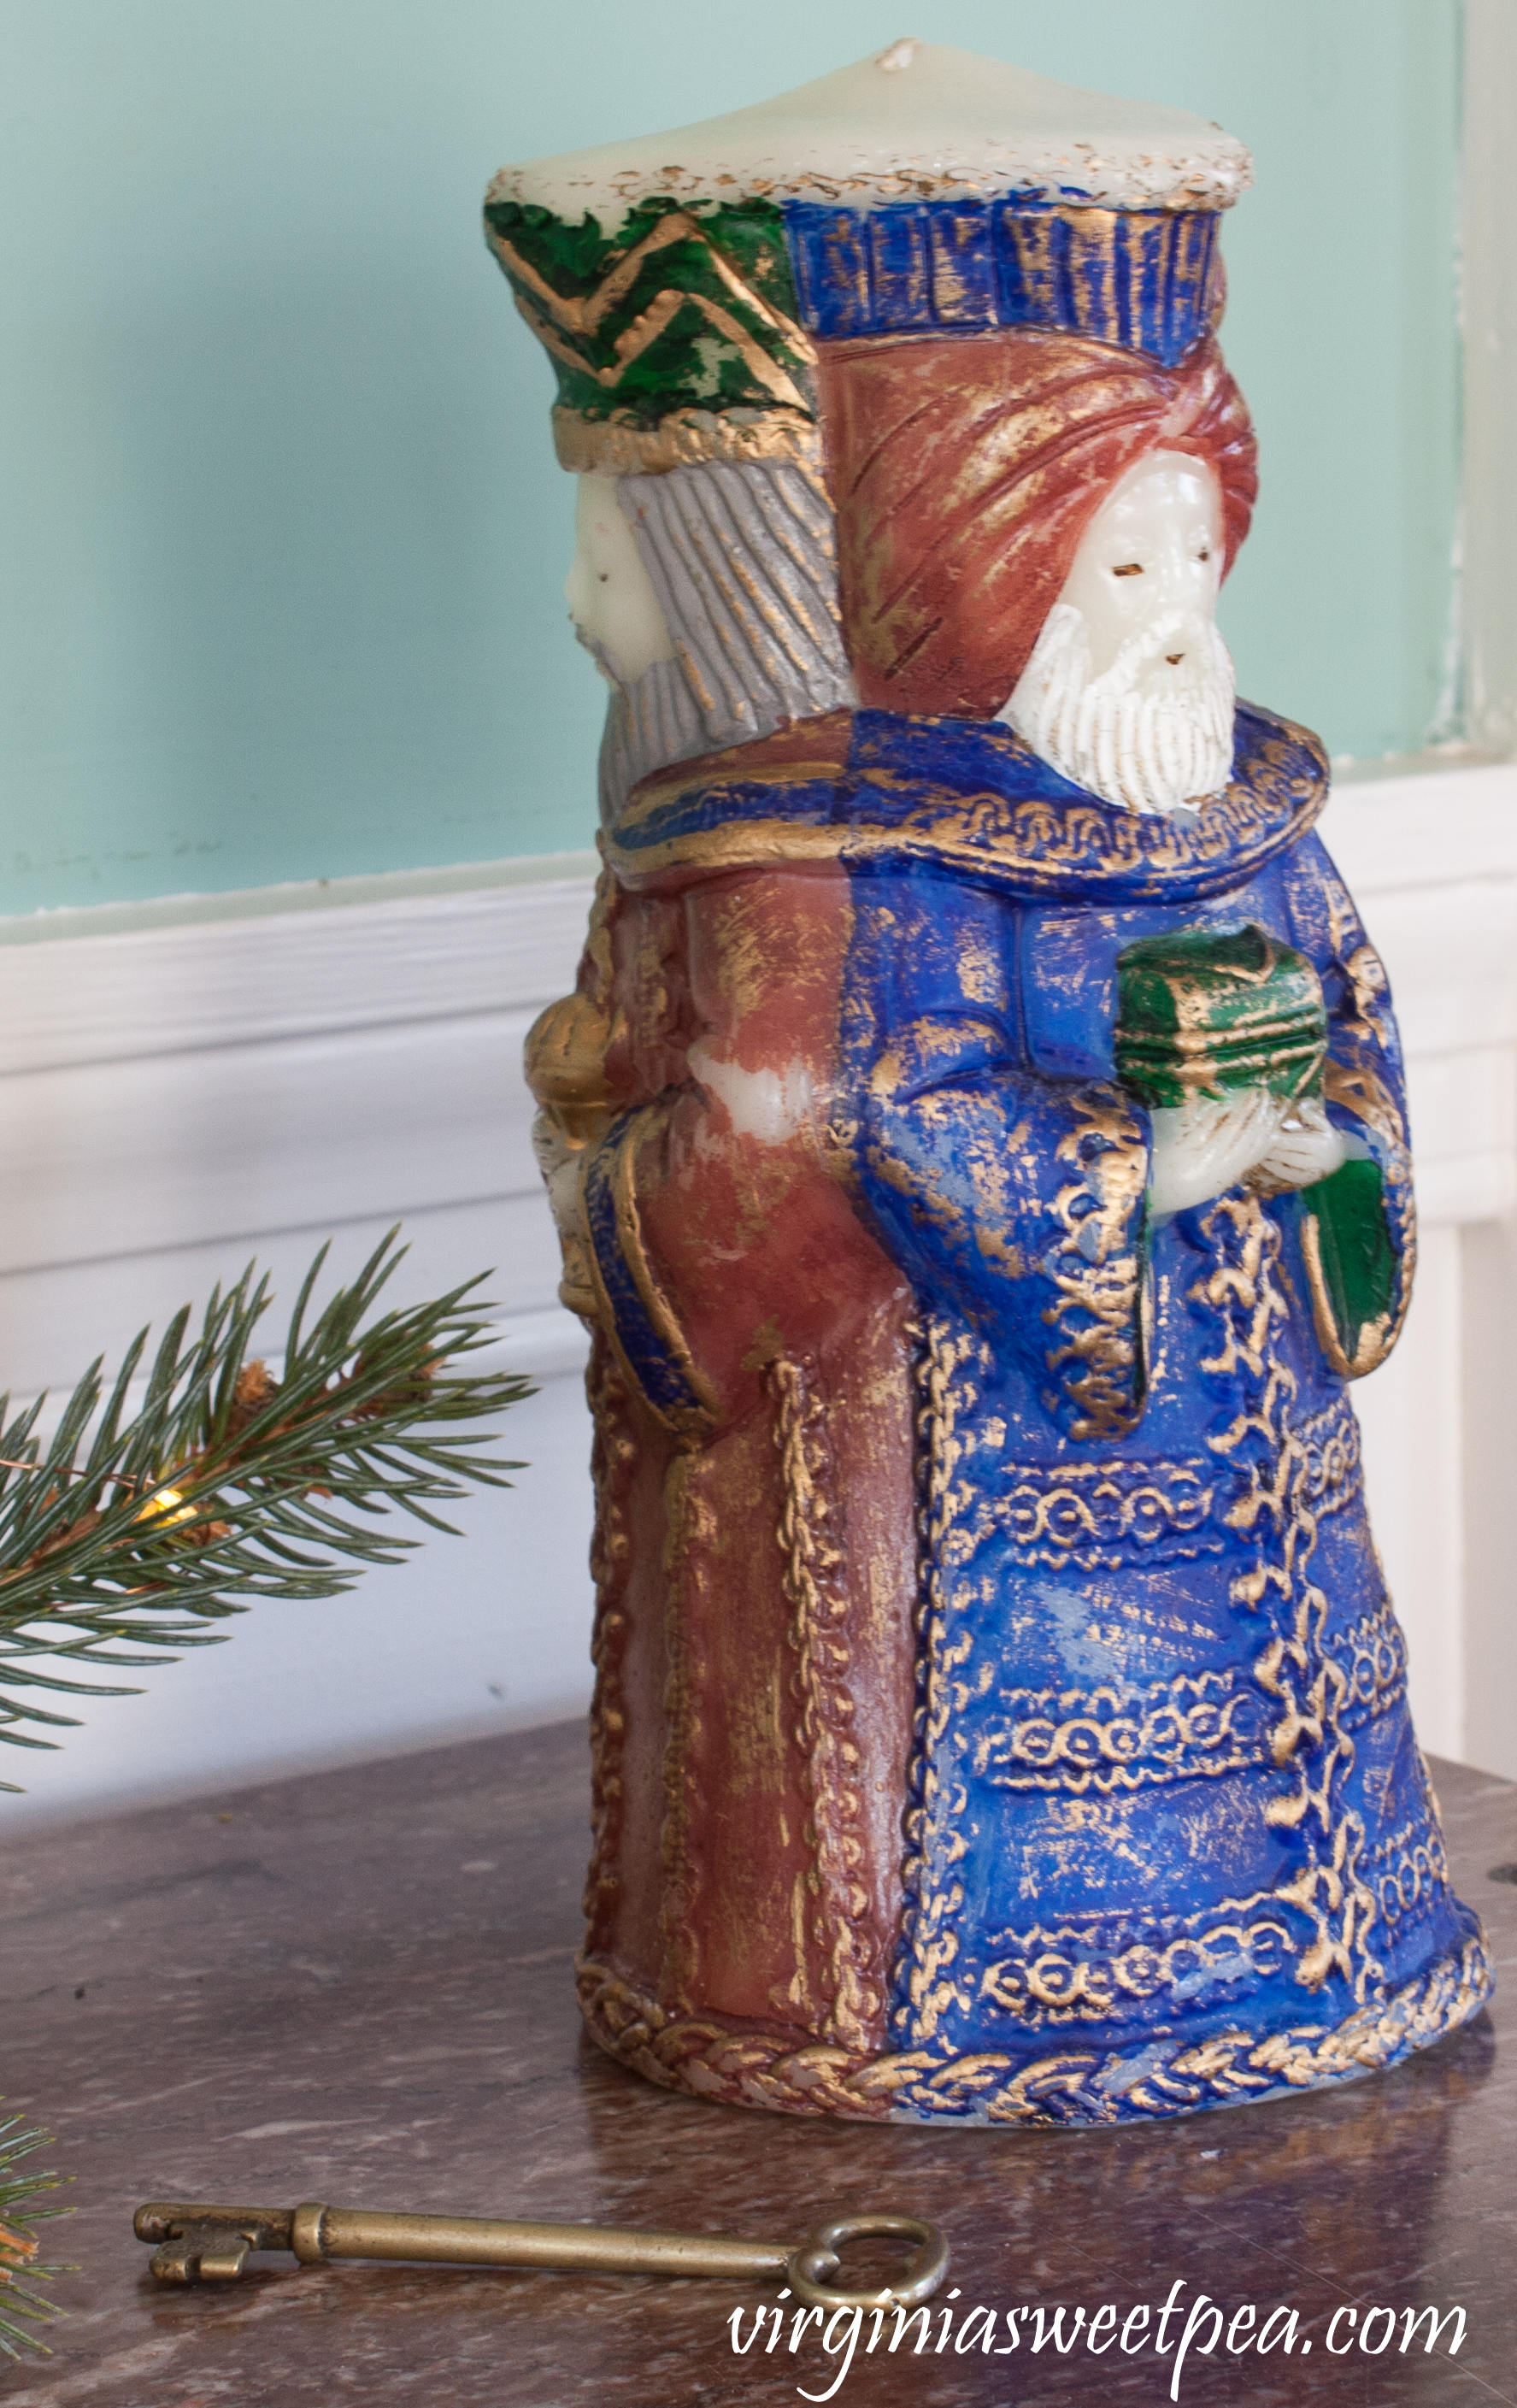 Vintage 3 Wise Men Christmas Candle #vintage #vintagechristmas #christmascandle #3wisemen